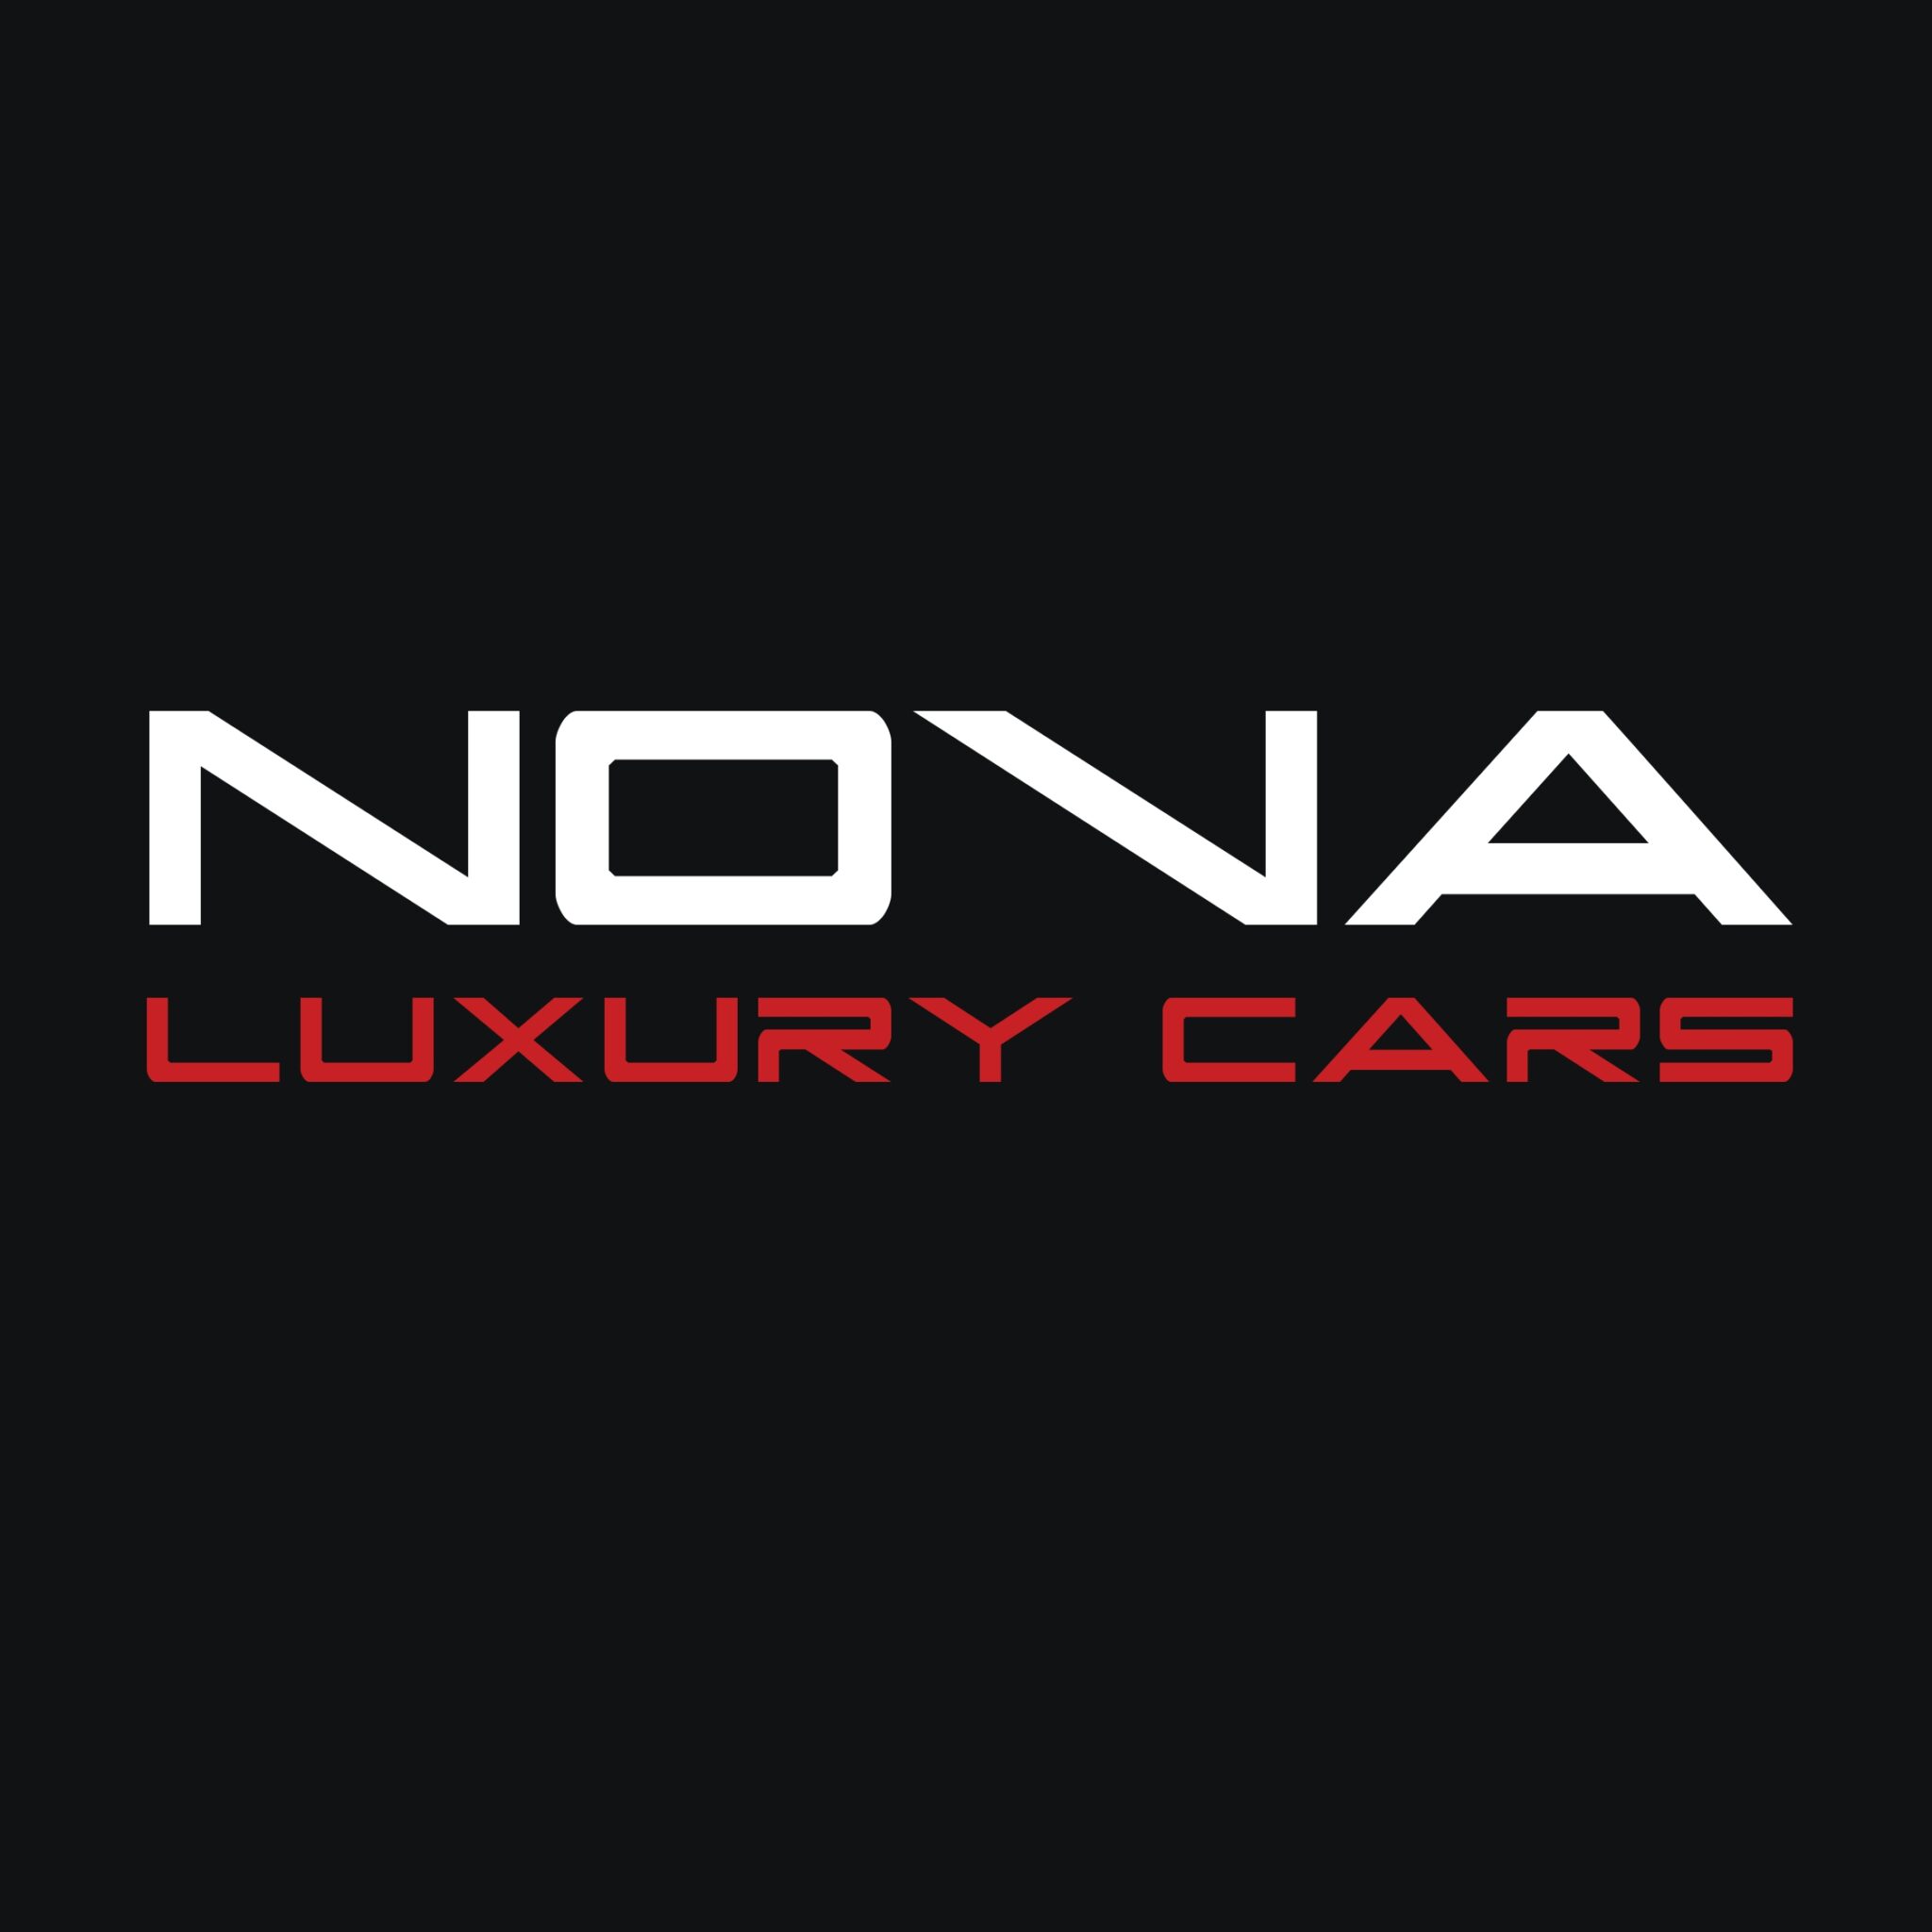 About us – Nova Luxury Cars